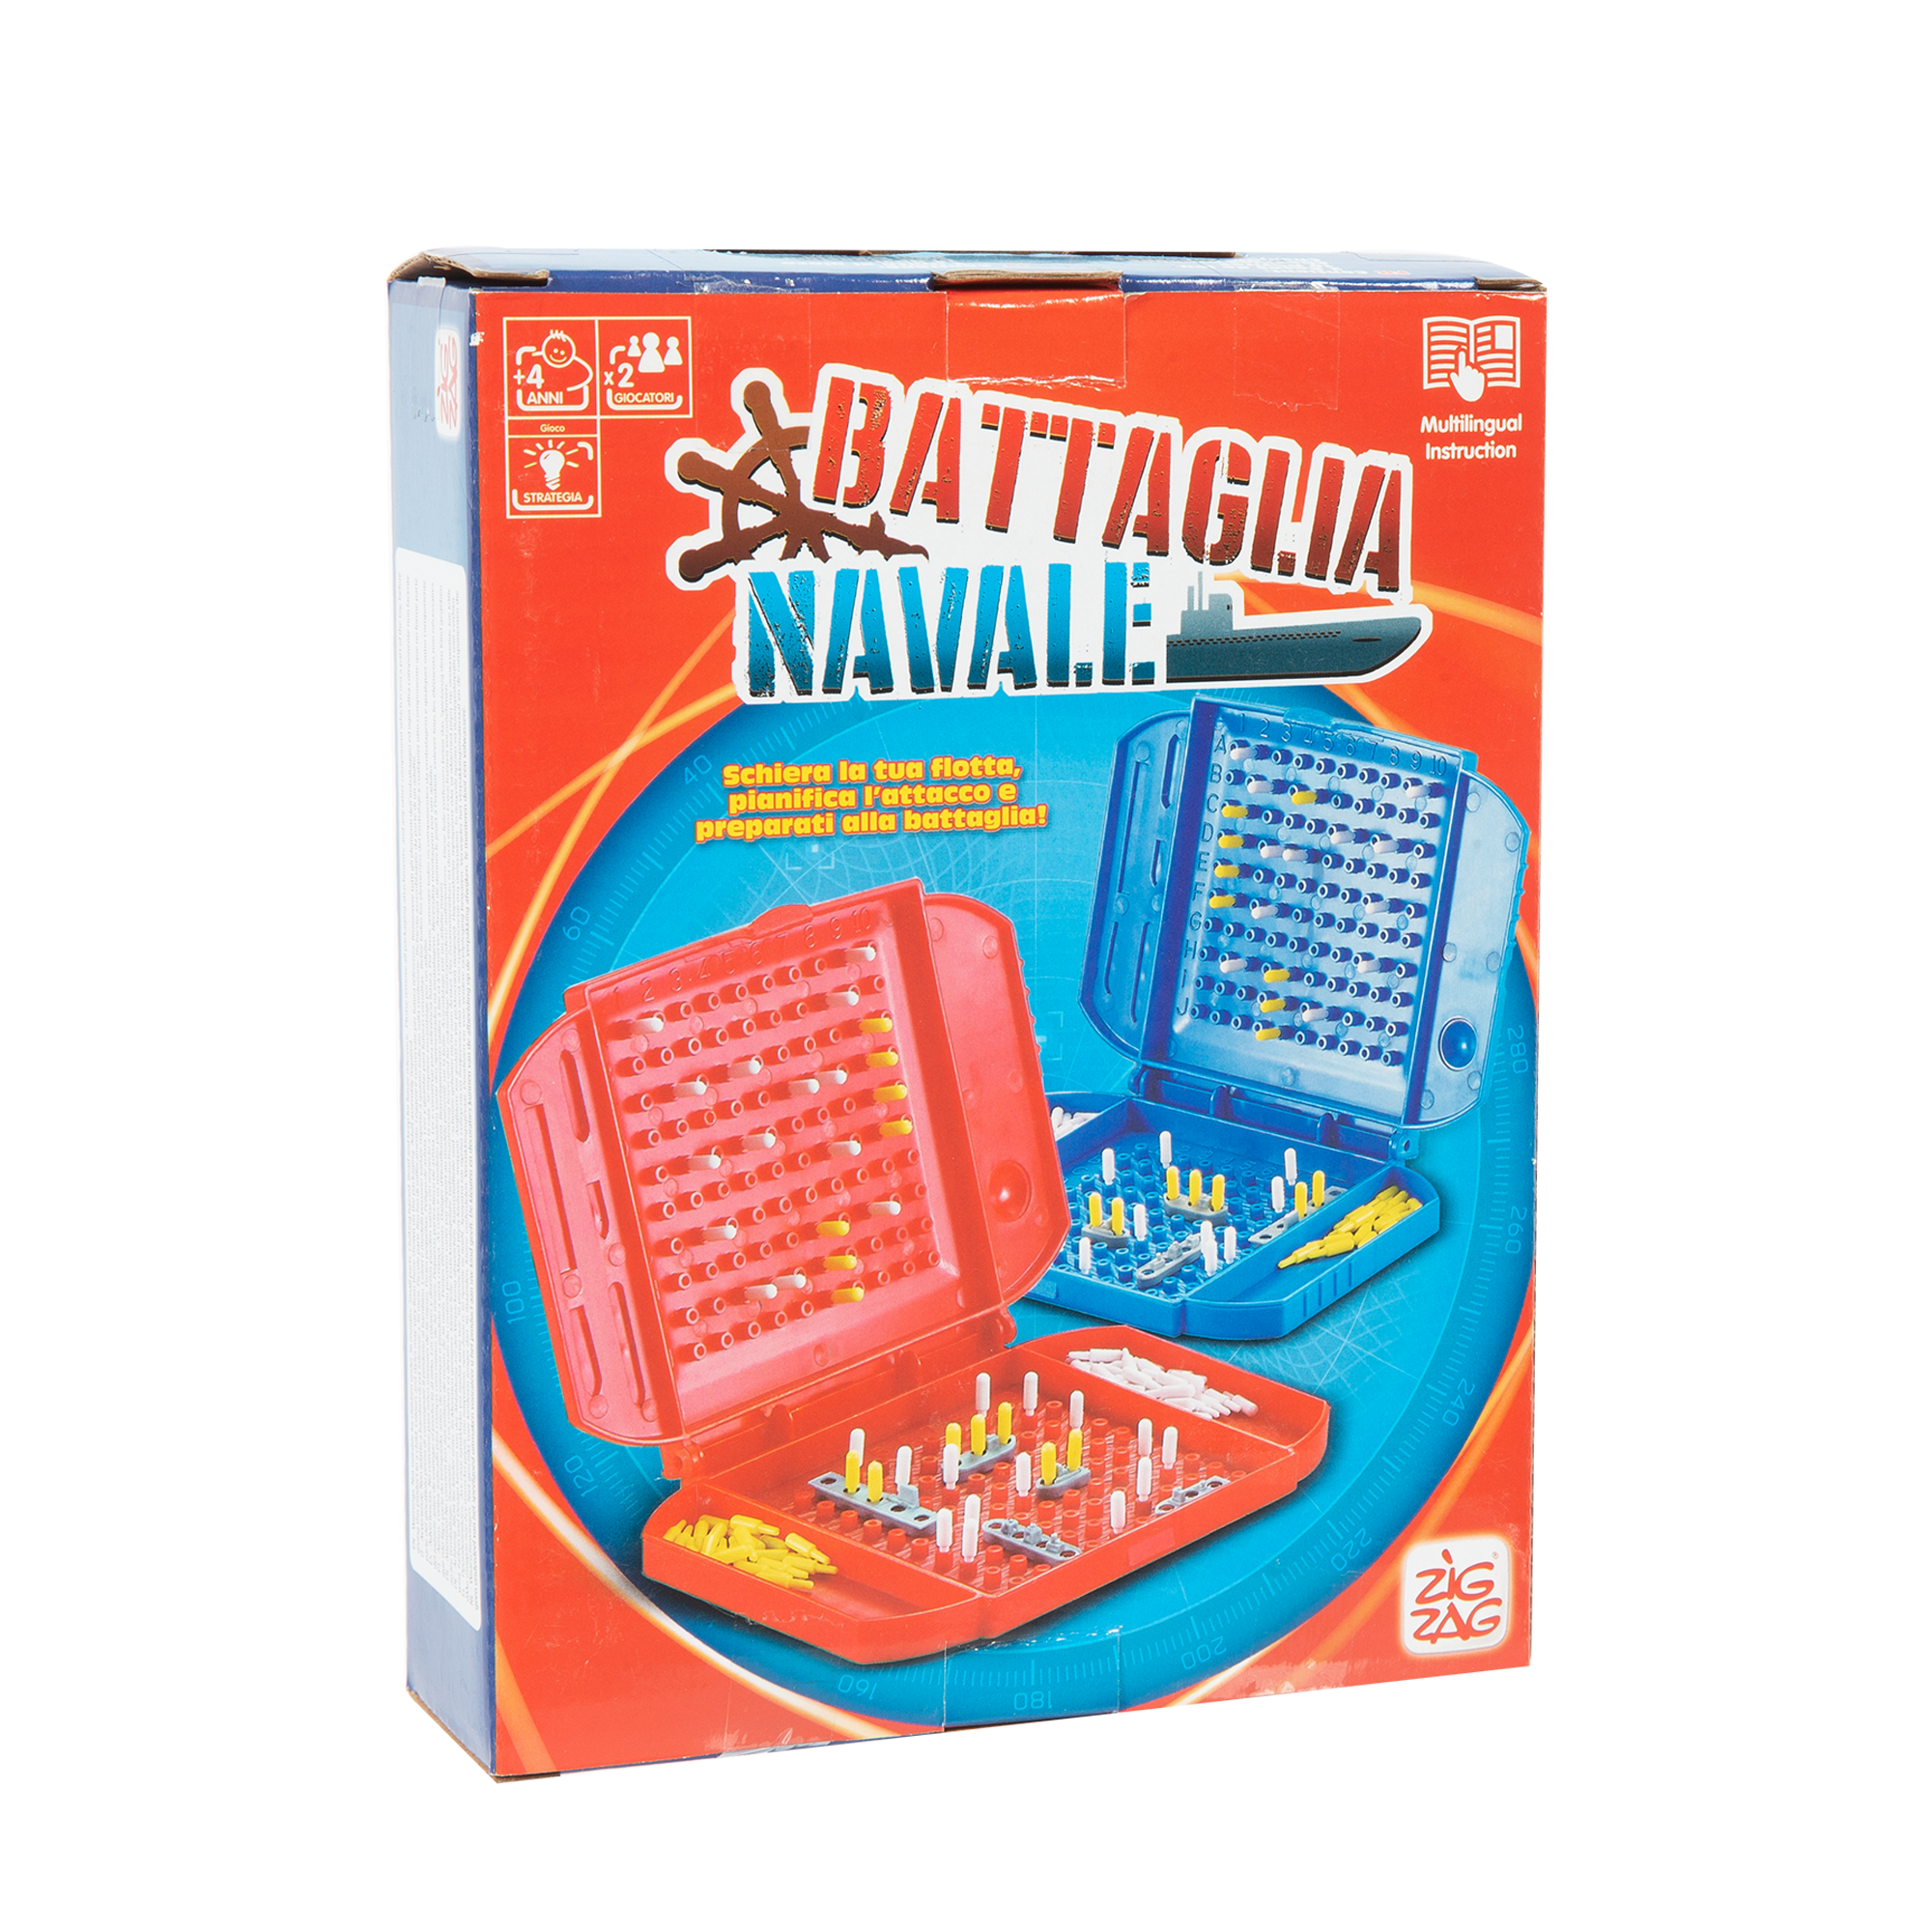 Battaglia navale - travel edition - ZIG ZAG